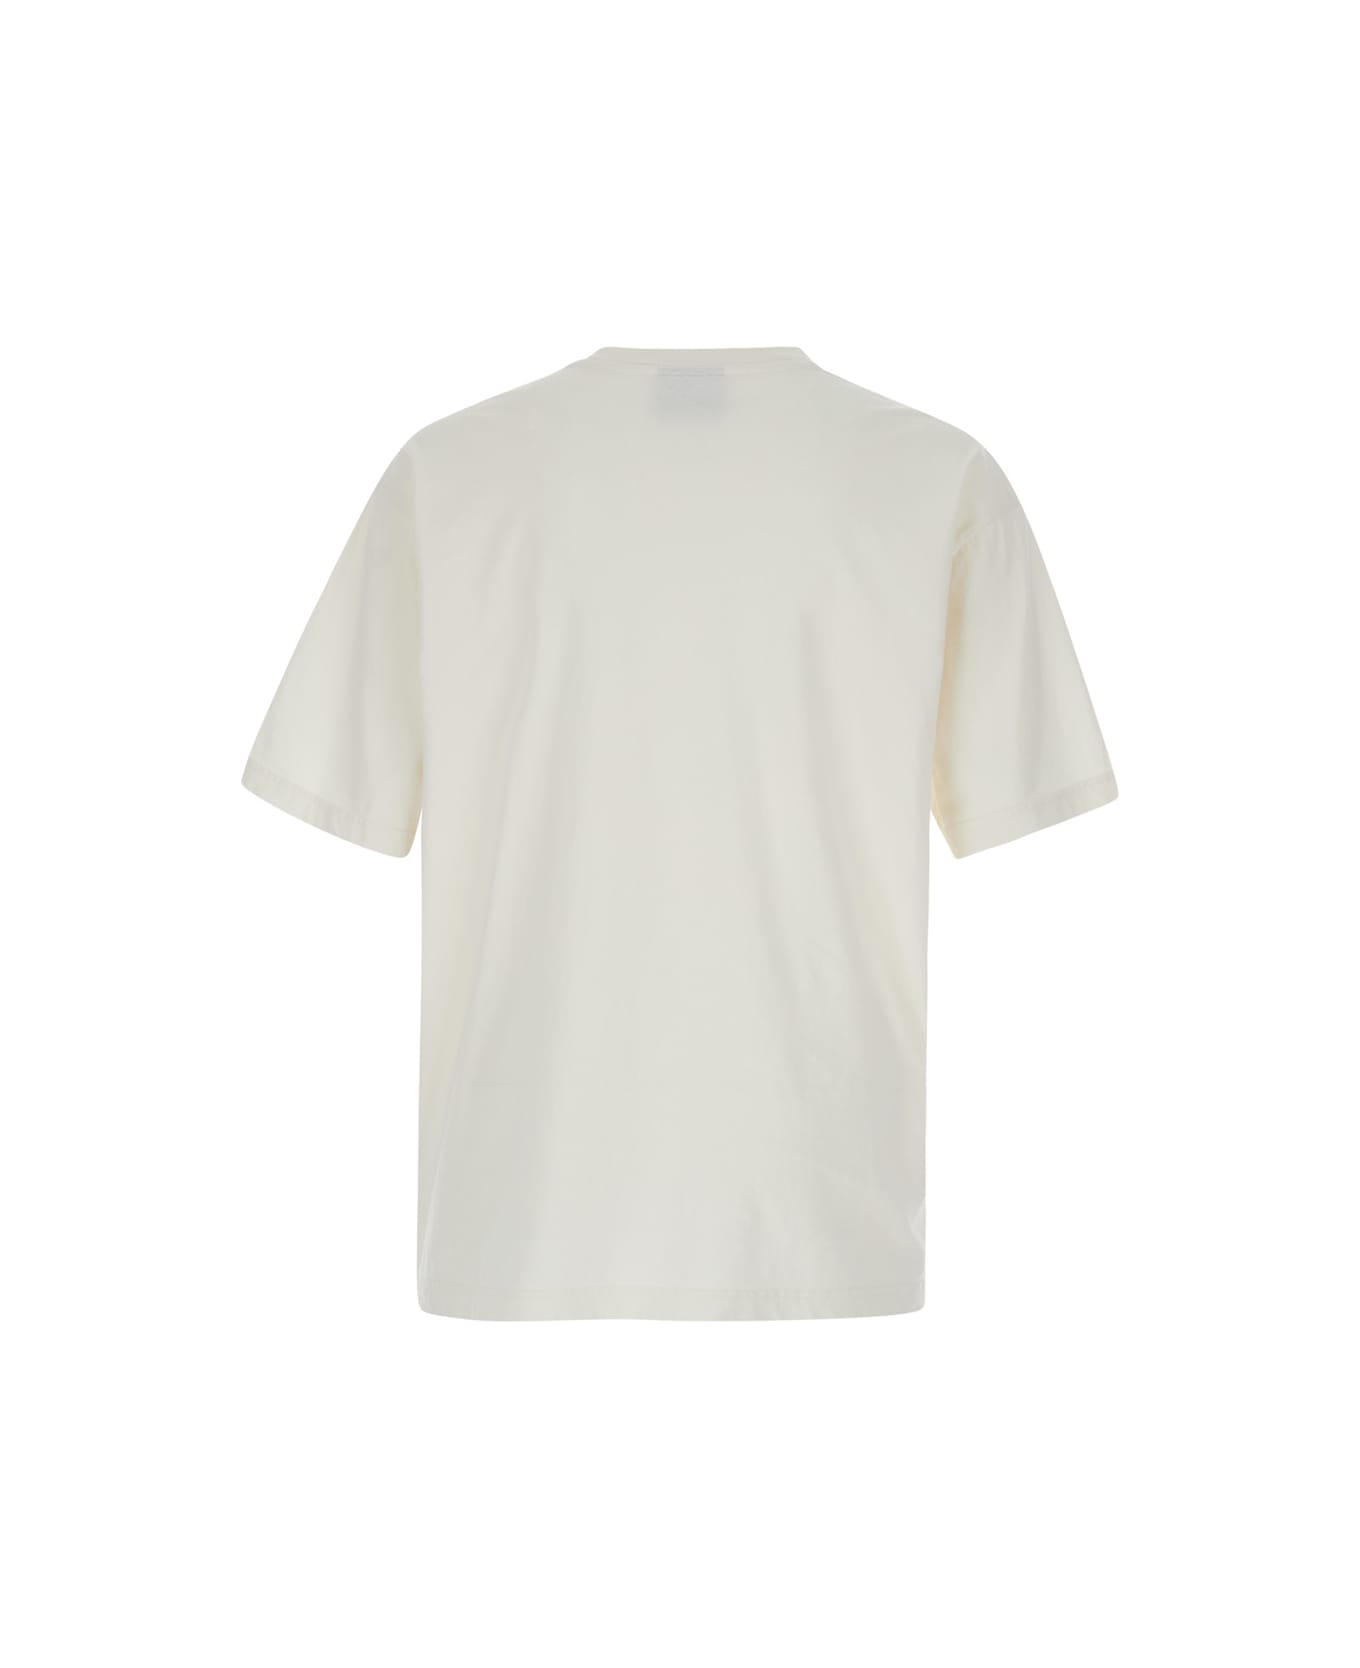 Bluemarble Smiley T-shirt - White